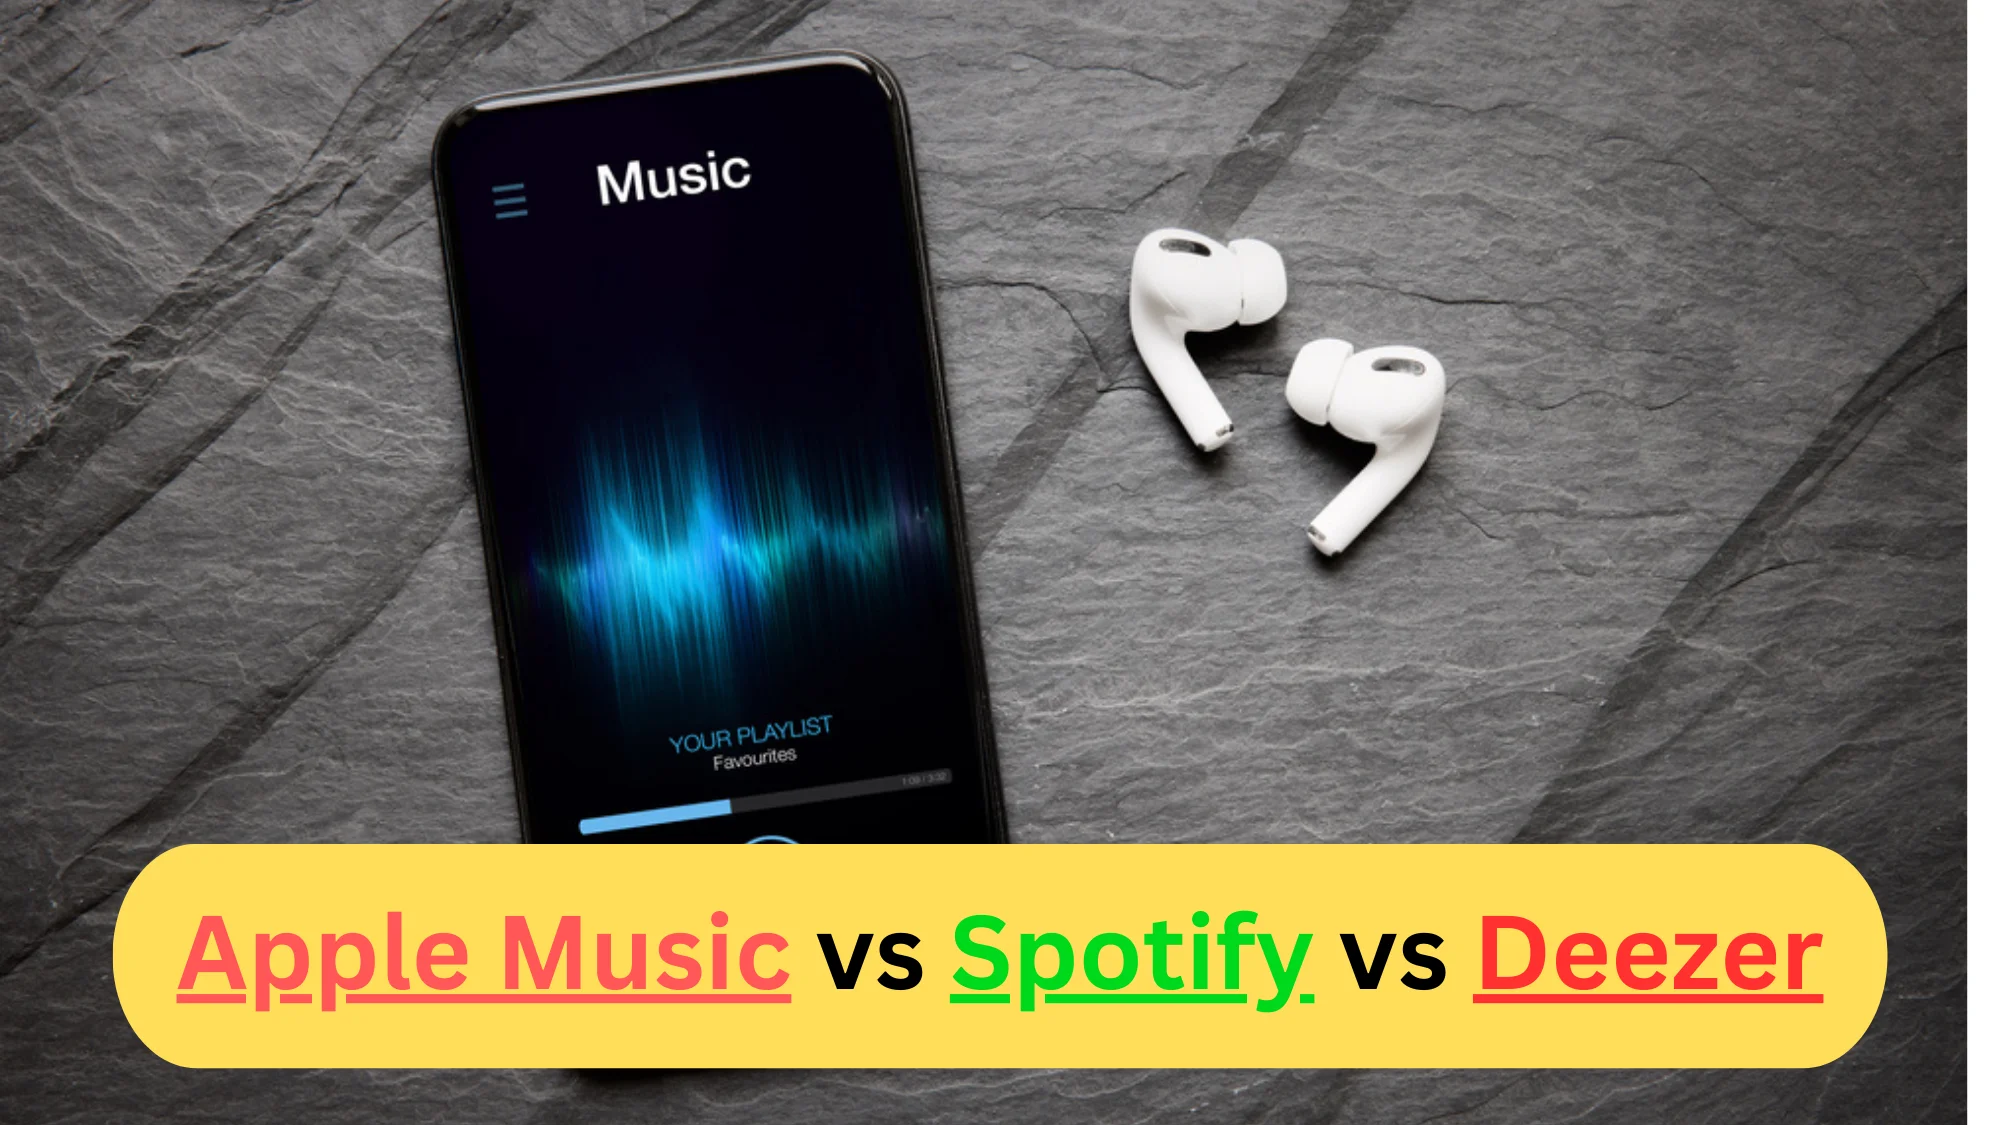 Apple Music vs Spotify vs Deezer